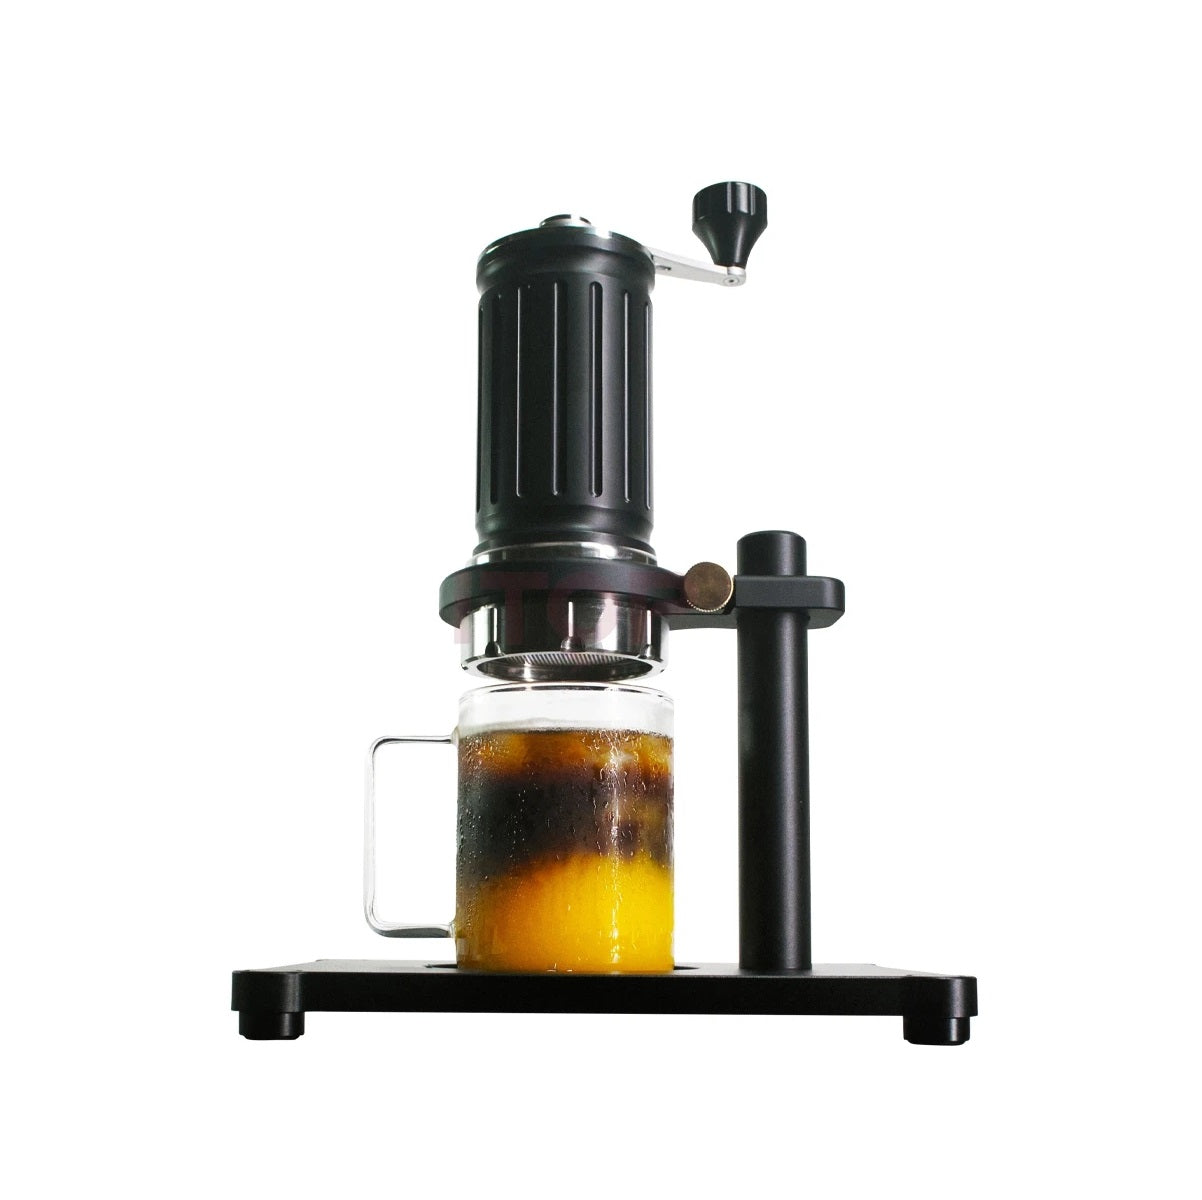 ITOP Hand Press Coffee Maker ML16 Unplug Manual Coffee Maker with